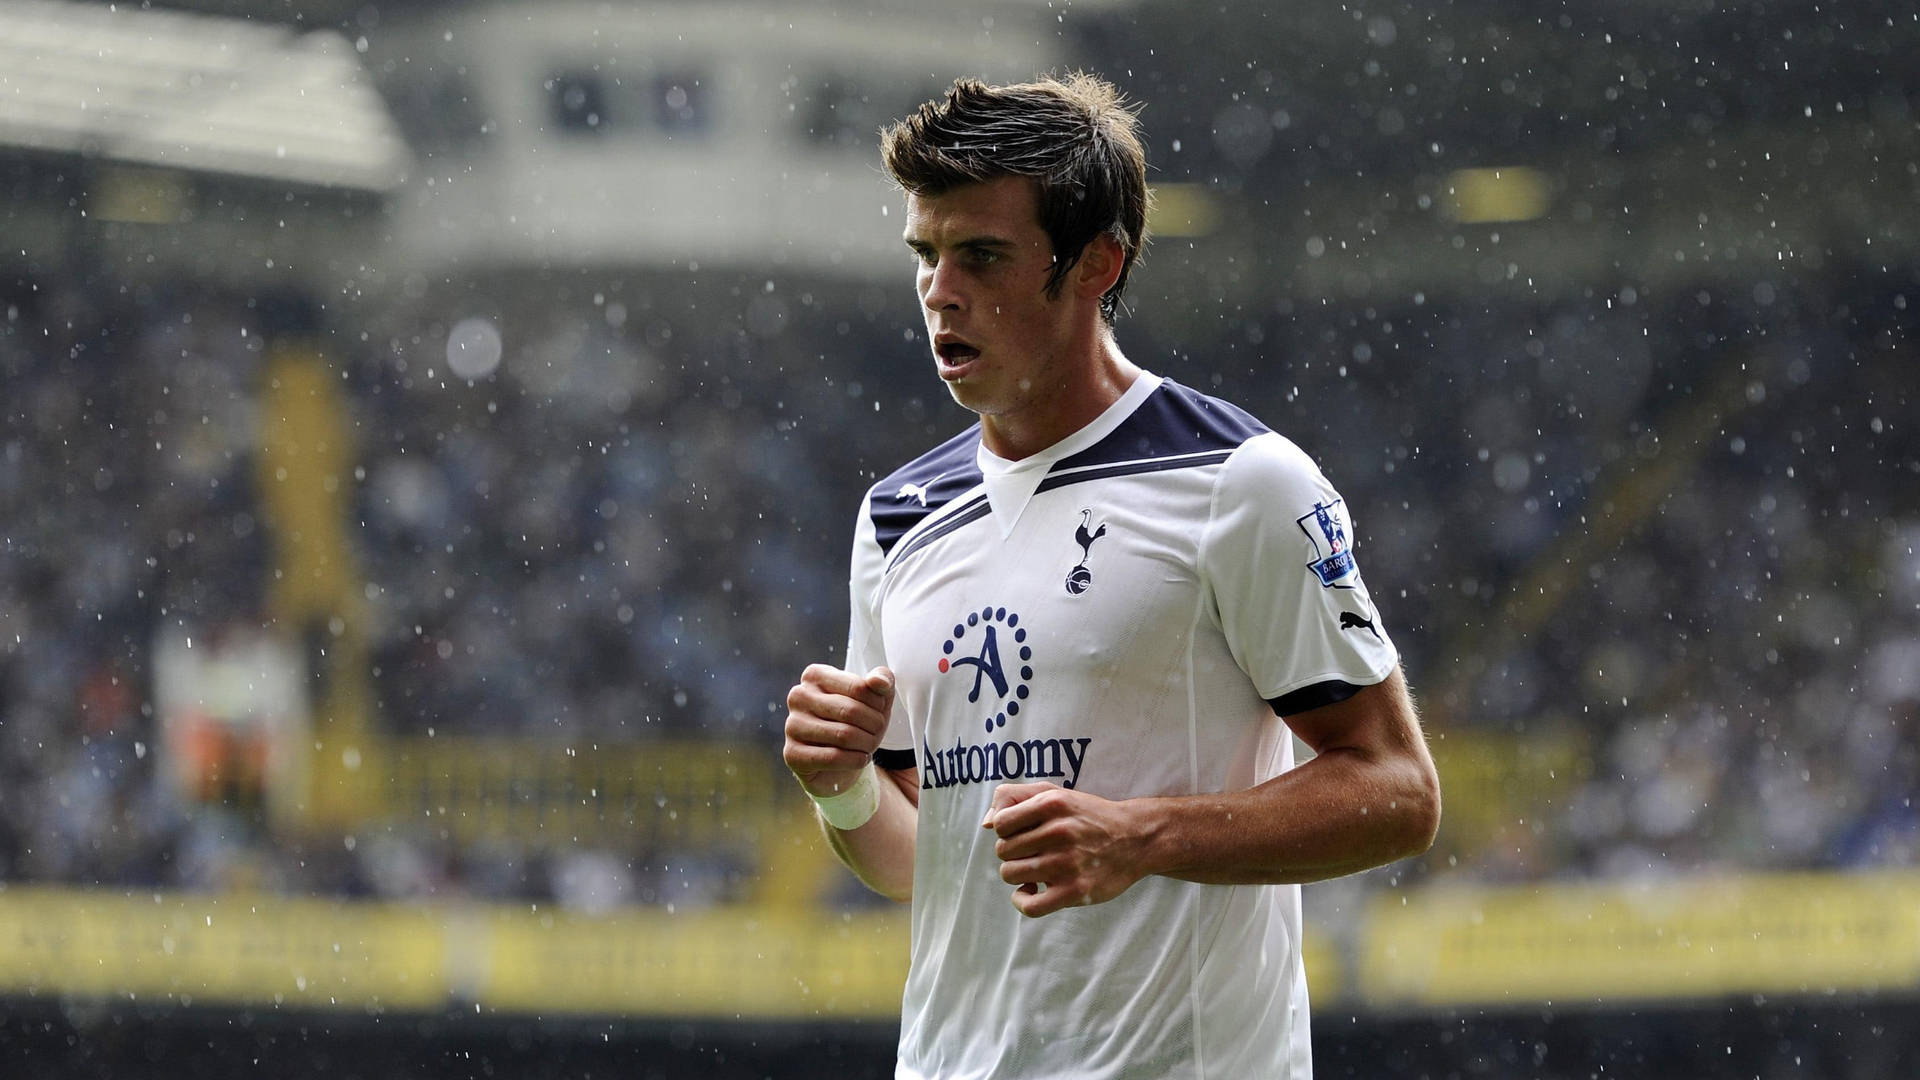 Gareth Bale In Rainy Day Background